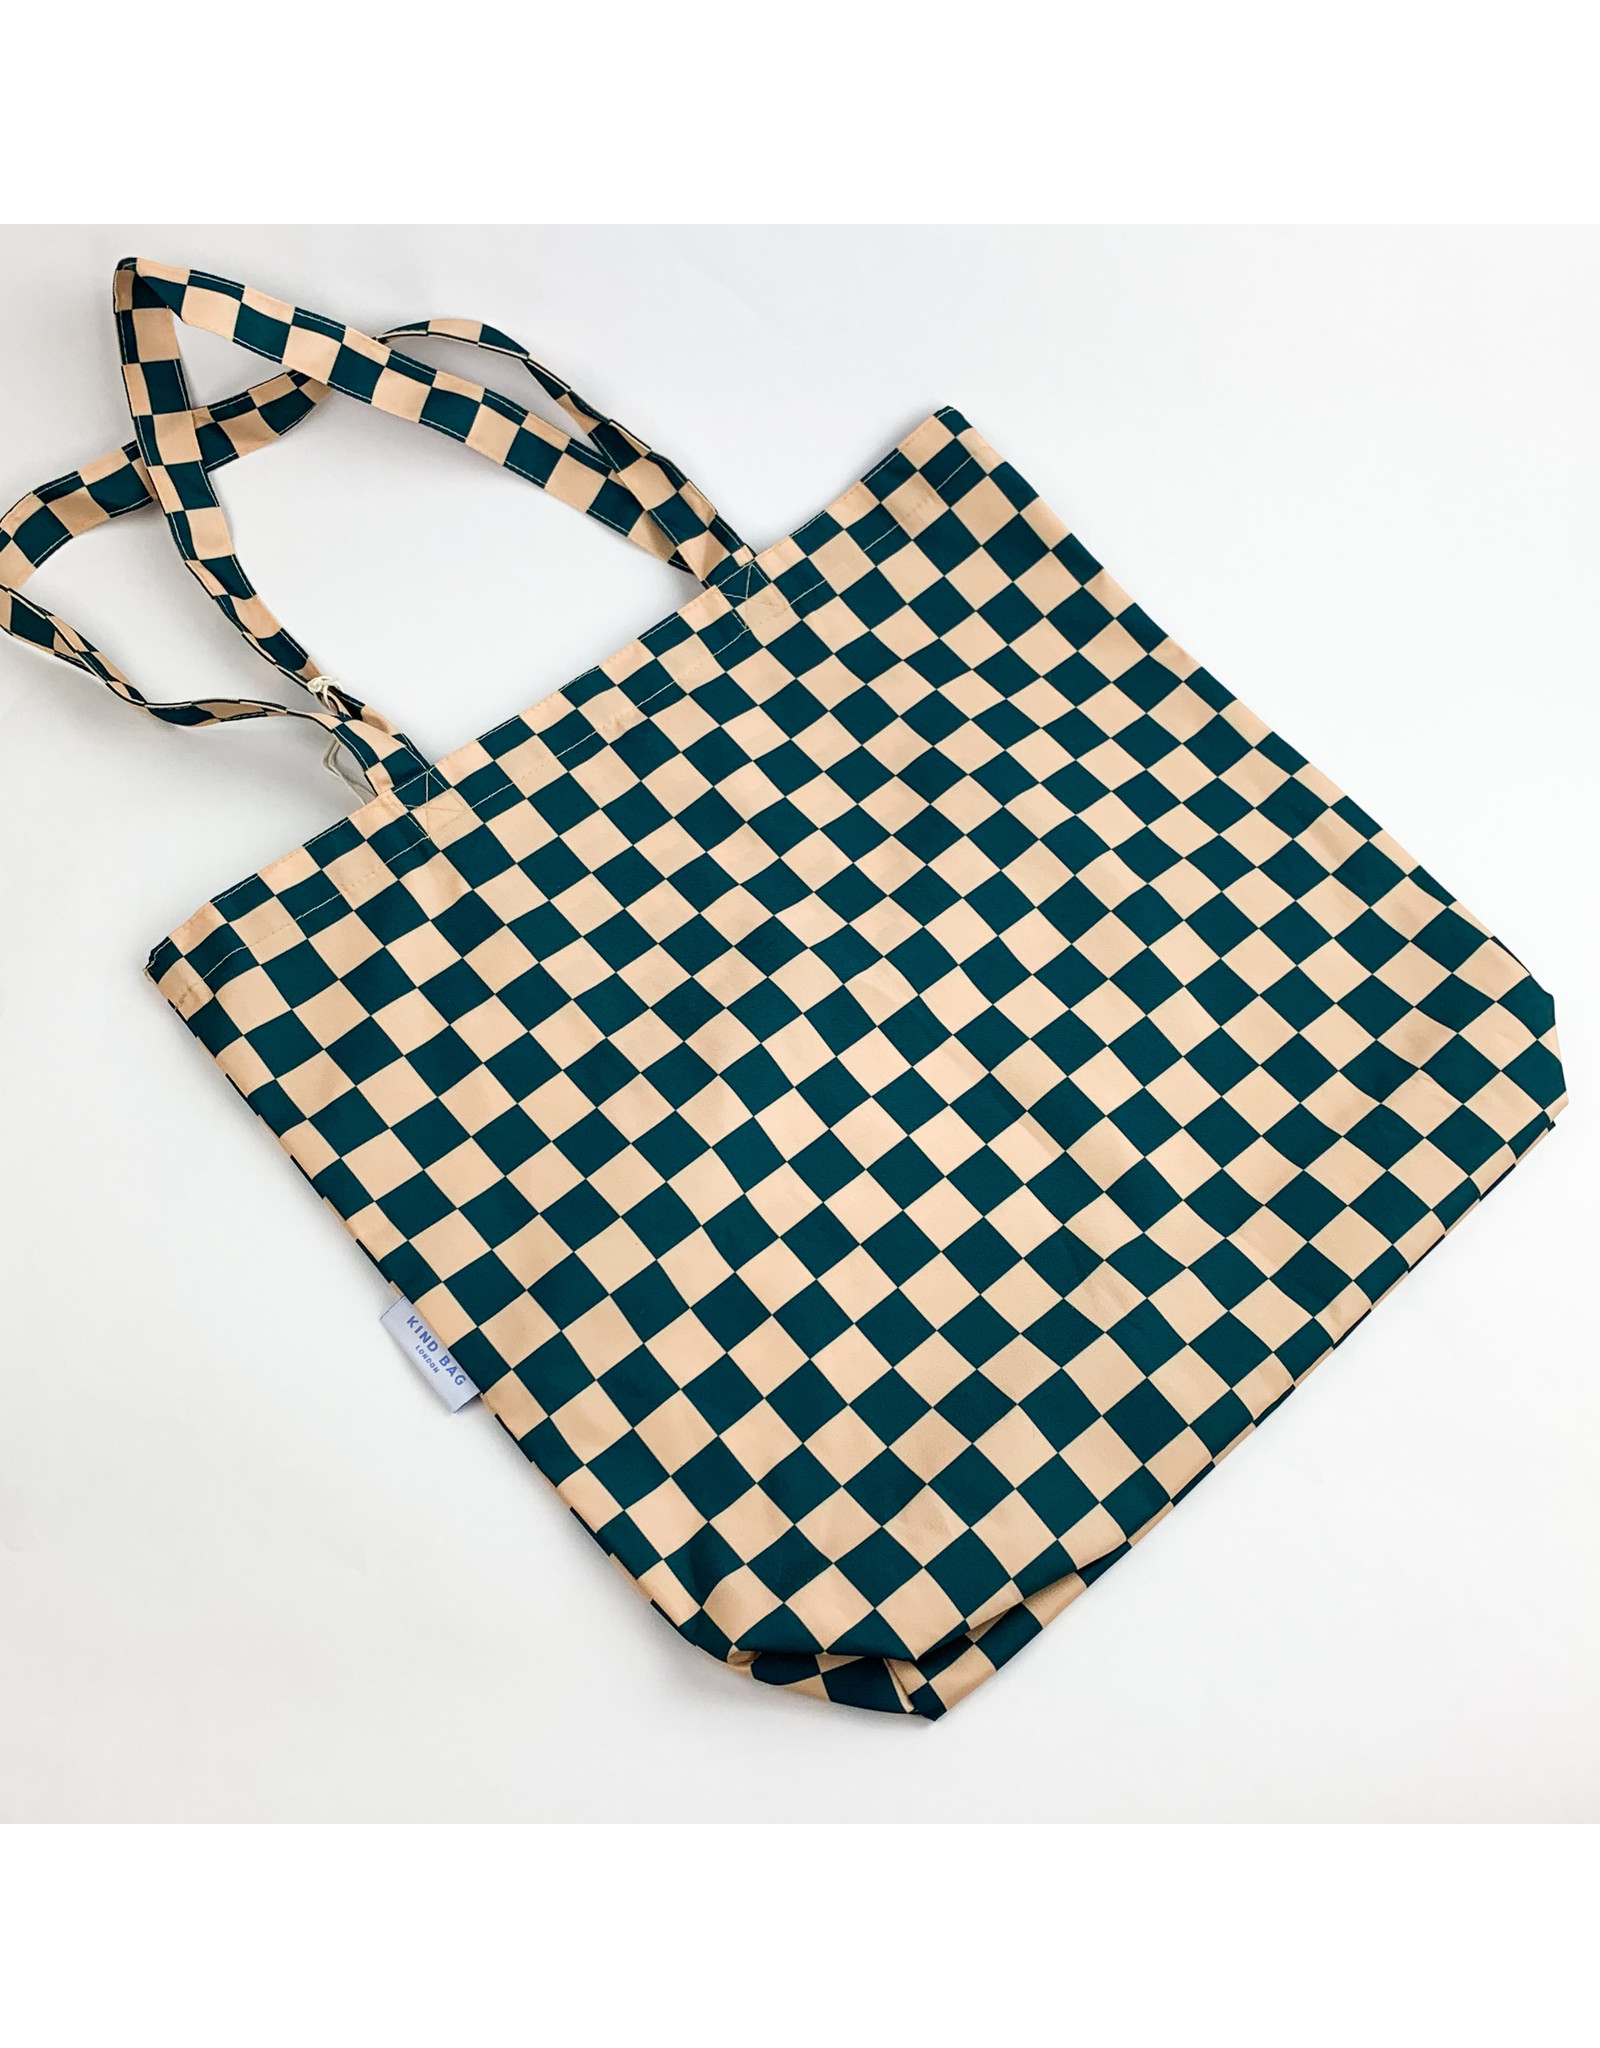 Kind Bag LTD Checkerboard tote-teal/beige